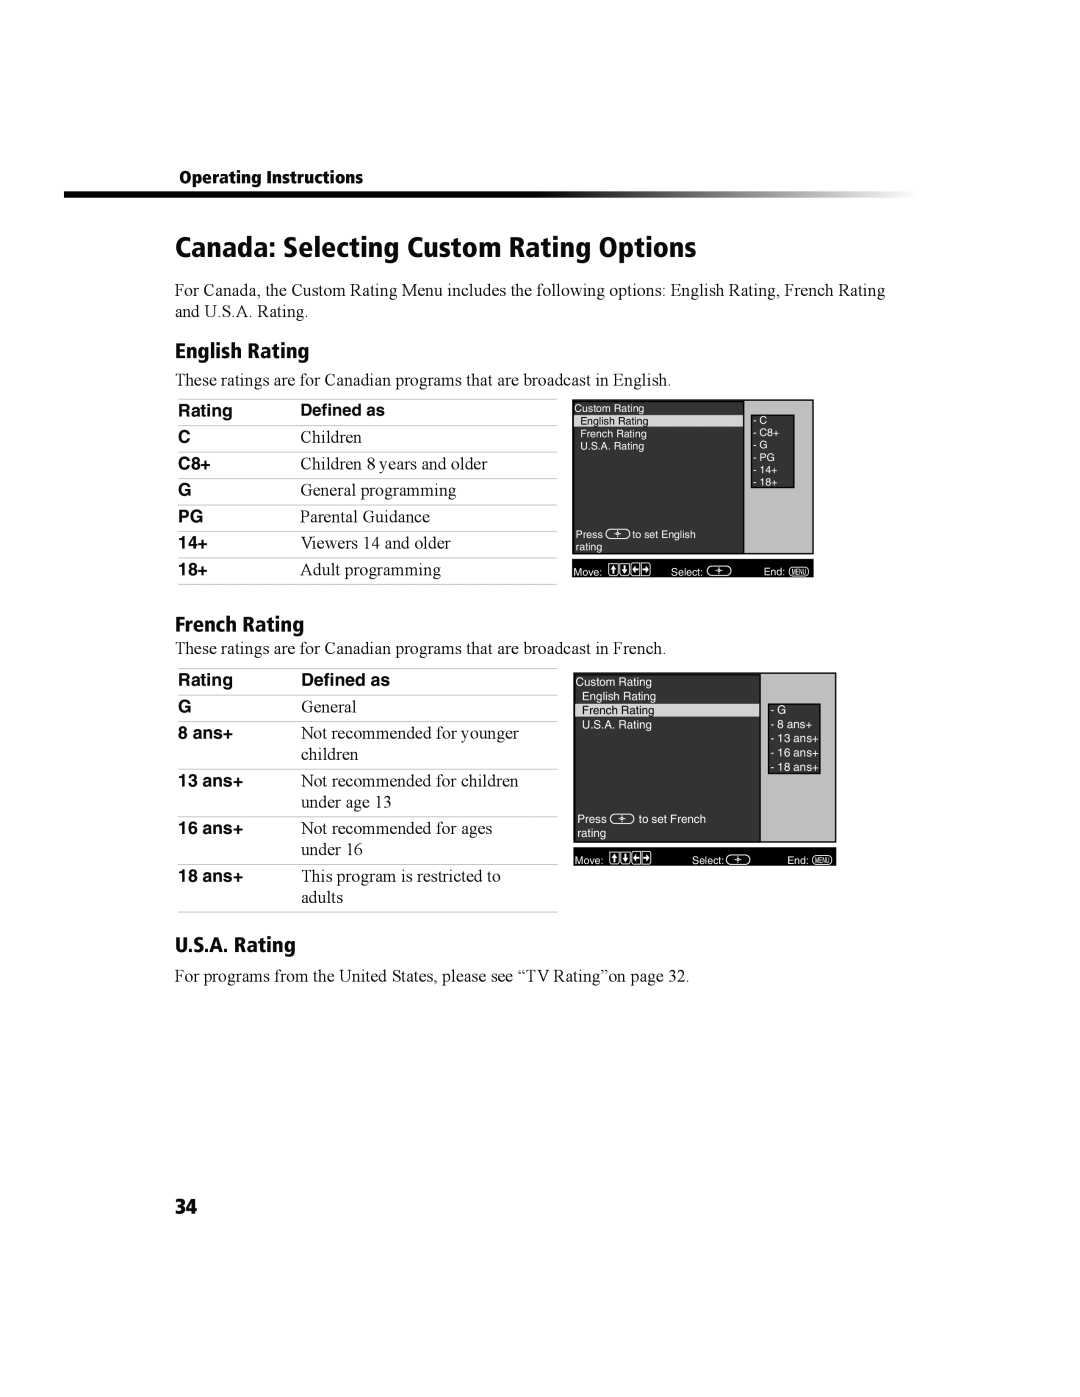 Sony KV 36FS200, KV 36FS100 manual Canada Selecting Custom Rating Options, English Rating, French Rating, U.S.A. Rating 